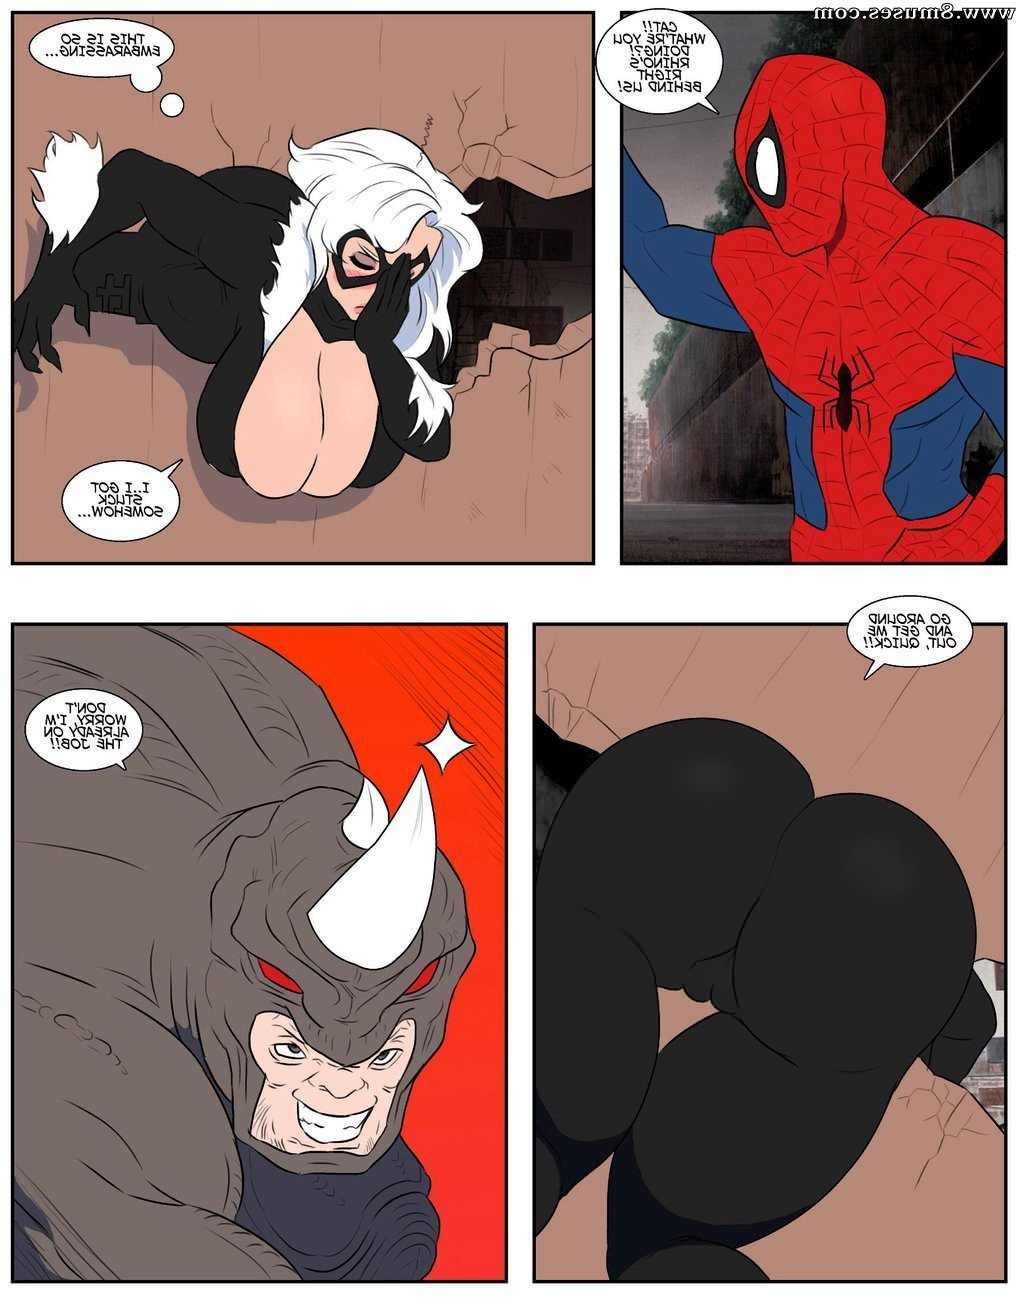 Jay-Marvel-Comics/Spider-Man Spider-Man__8muses_-_Sex_and_Porn_Comics.jpg